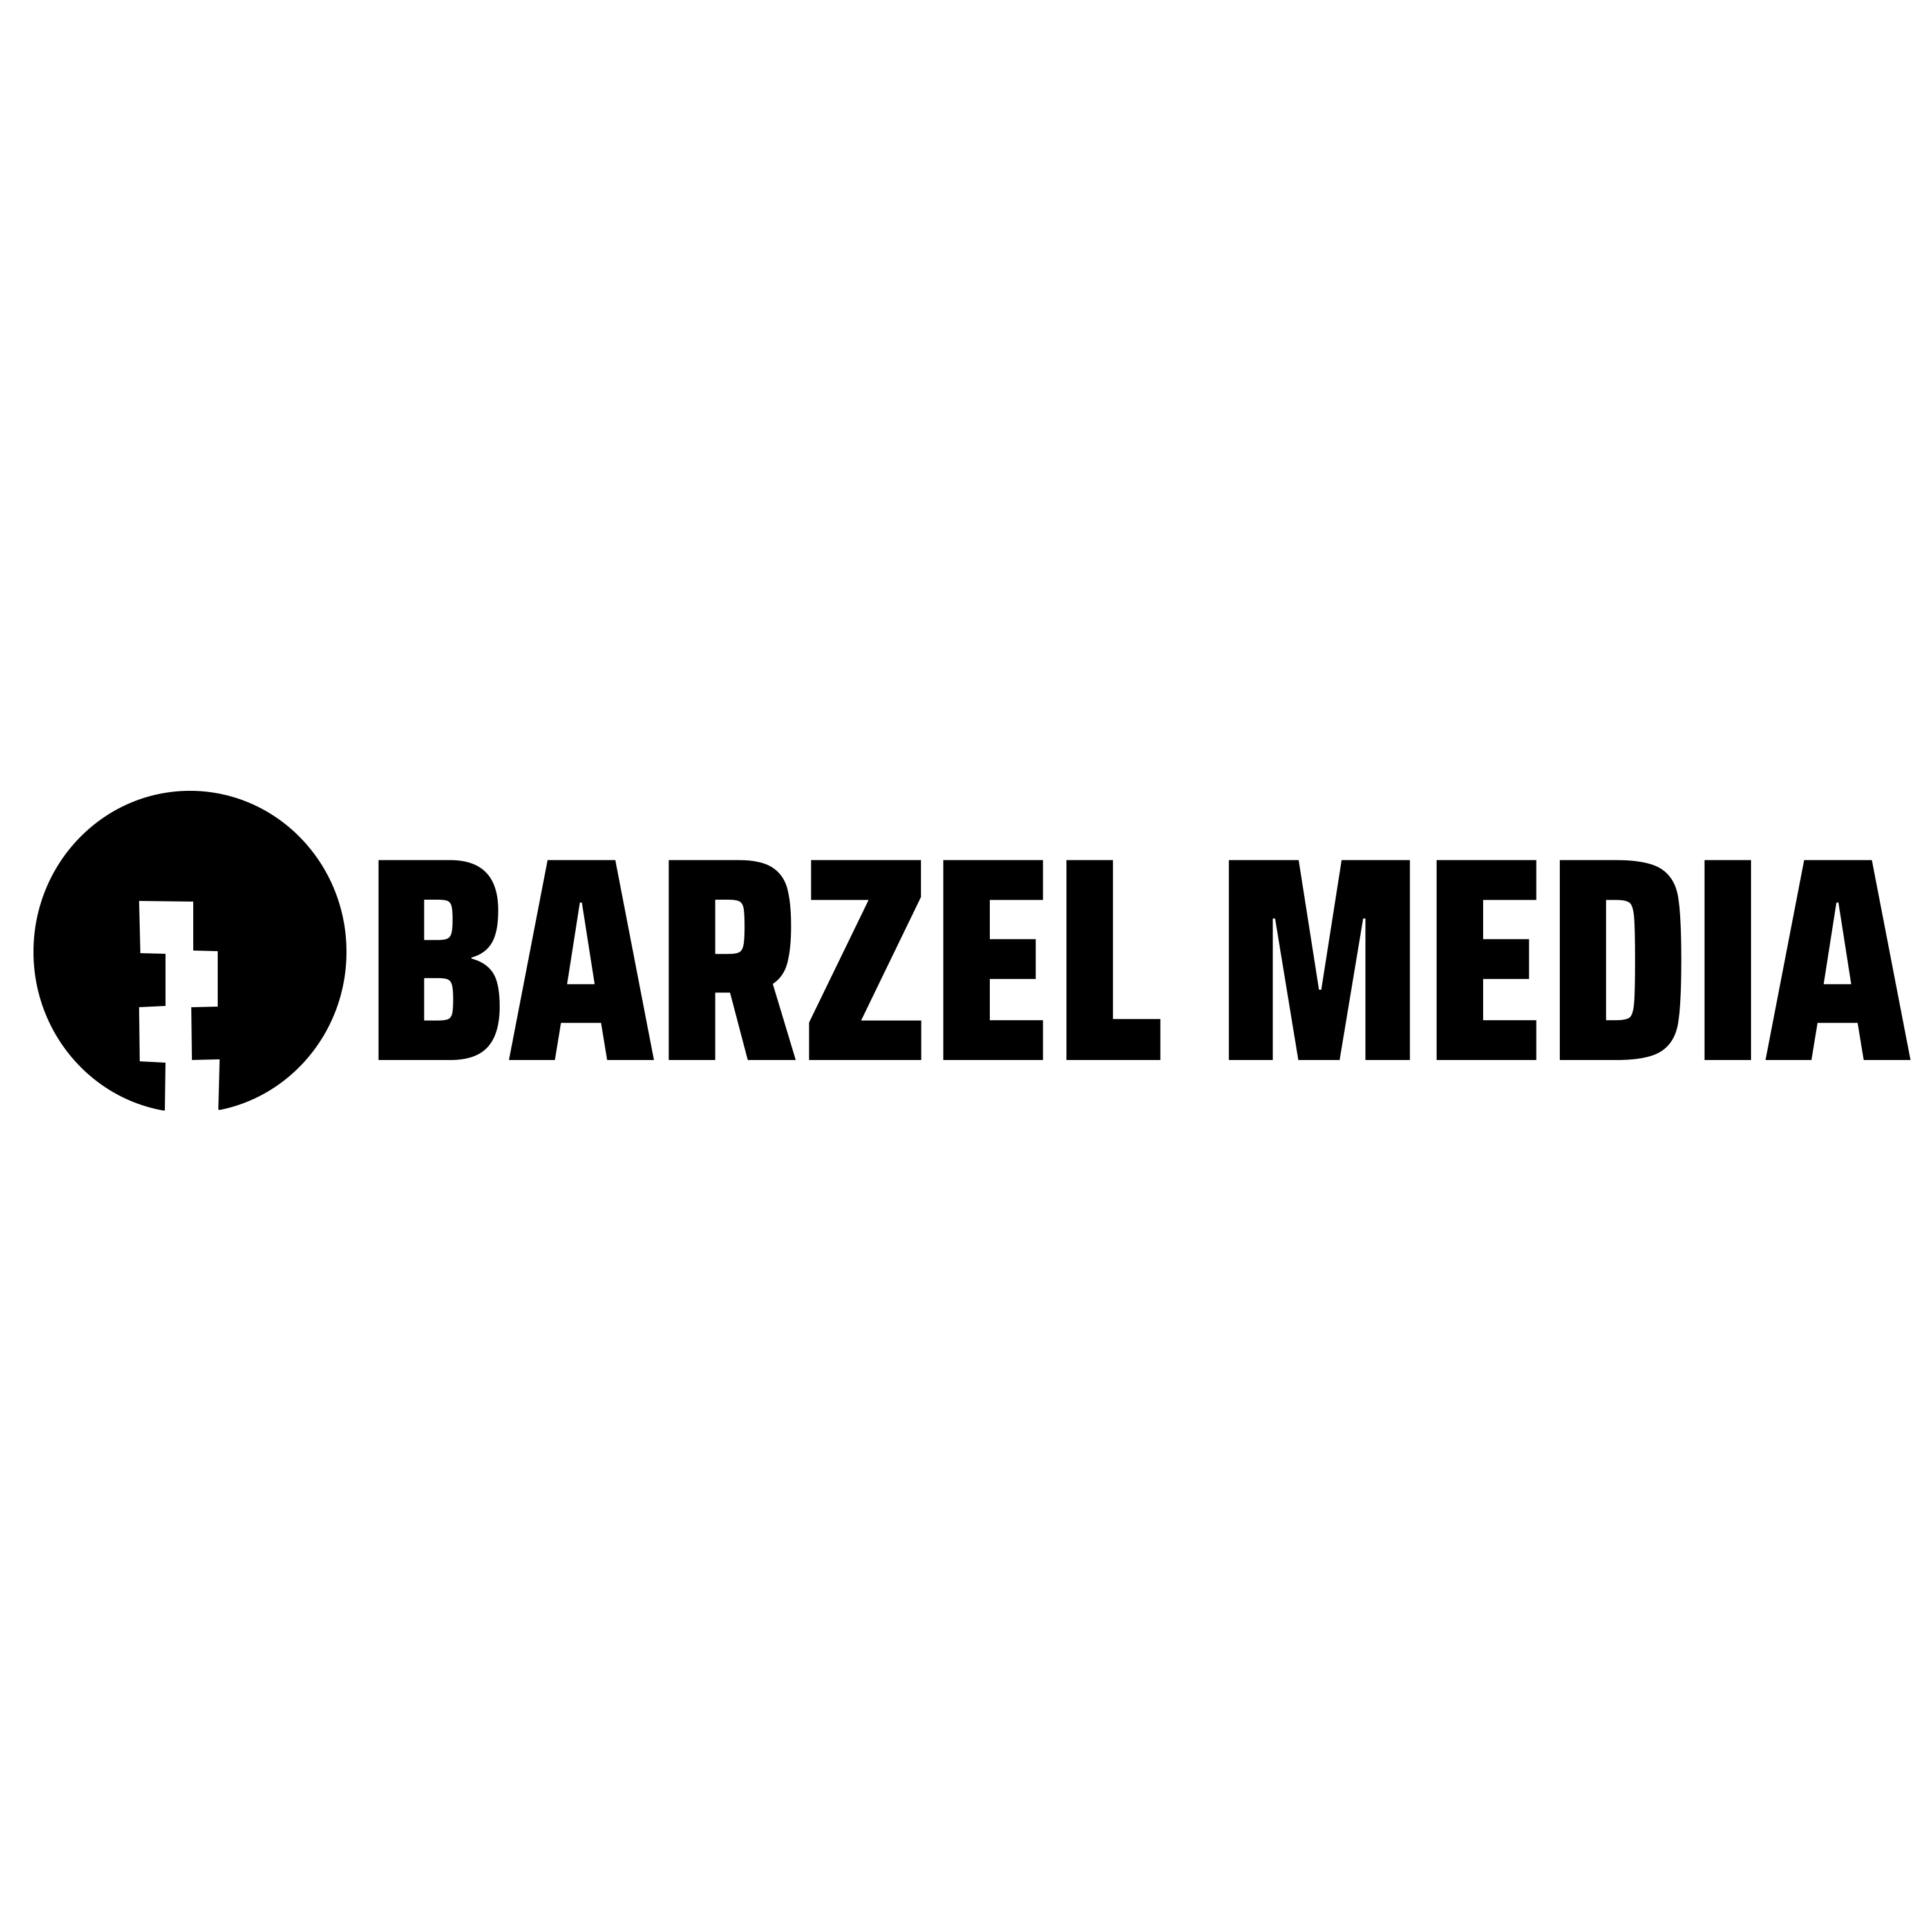 Barzel Media logo